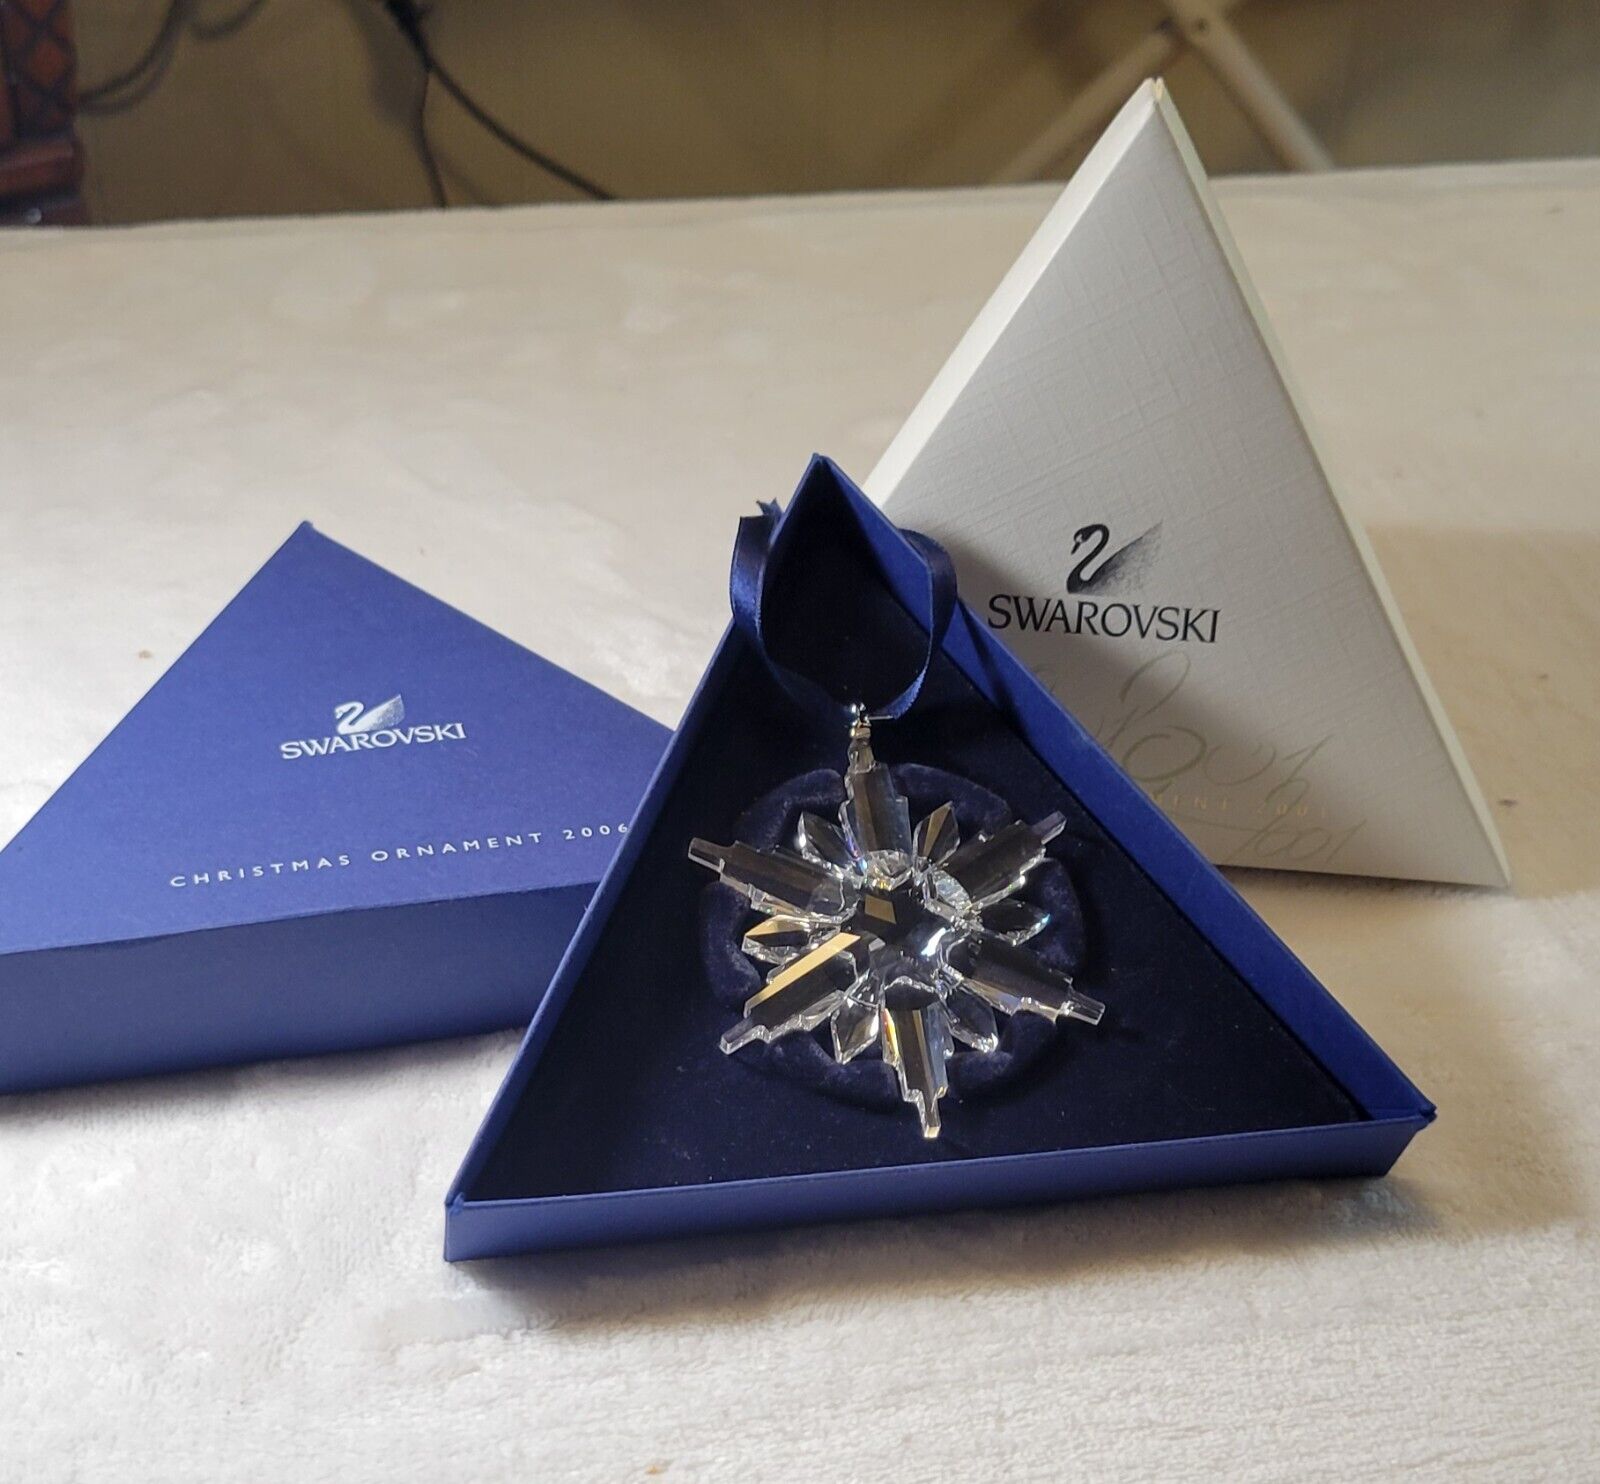 Swarovski Crystal Snowflake Annual Christmas Ornament 2006 W/Original Box